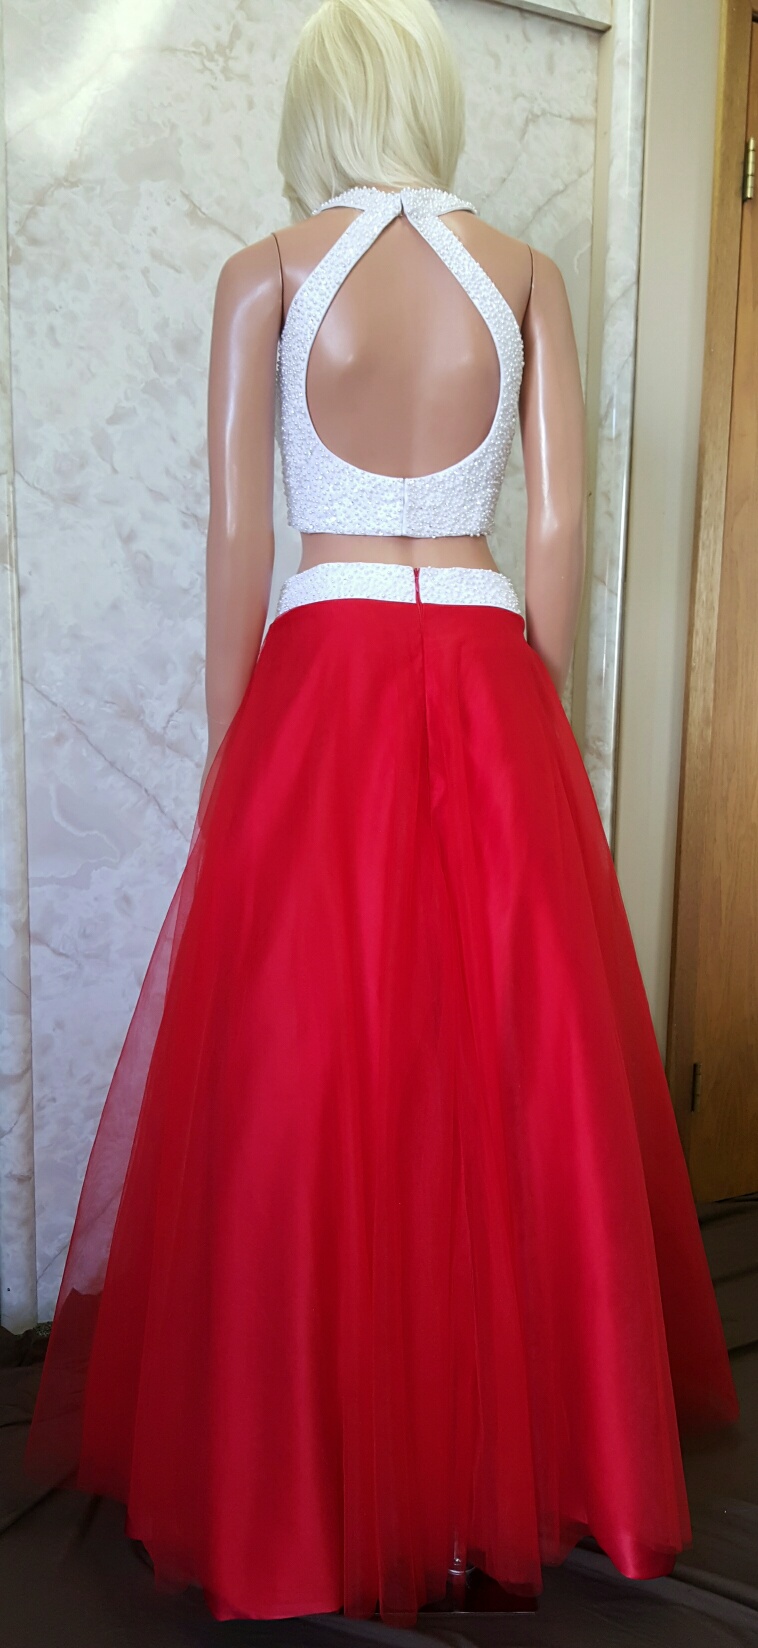 crop top & skirt prom dresses